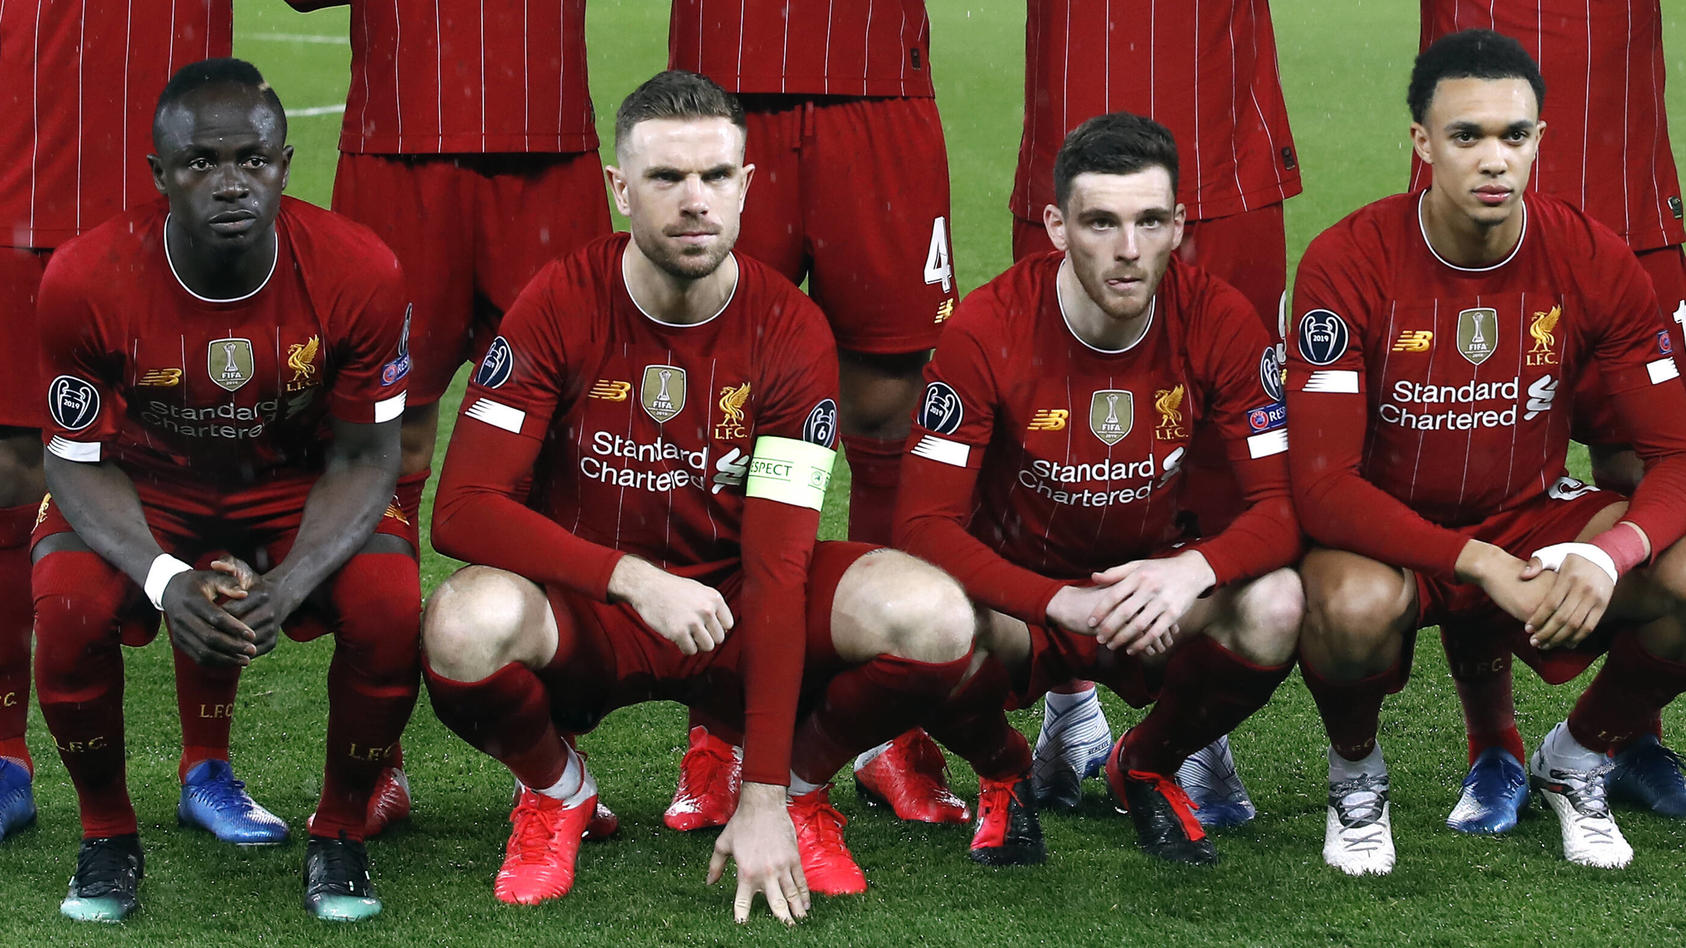 Teamfoto FC Liverpool